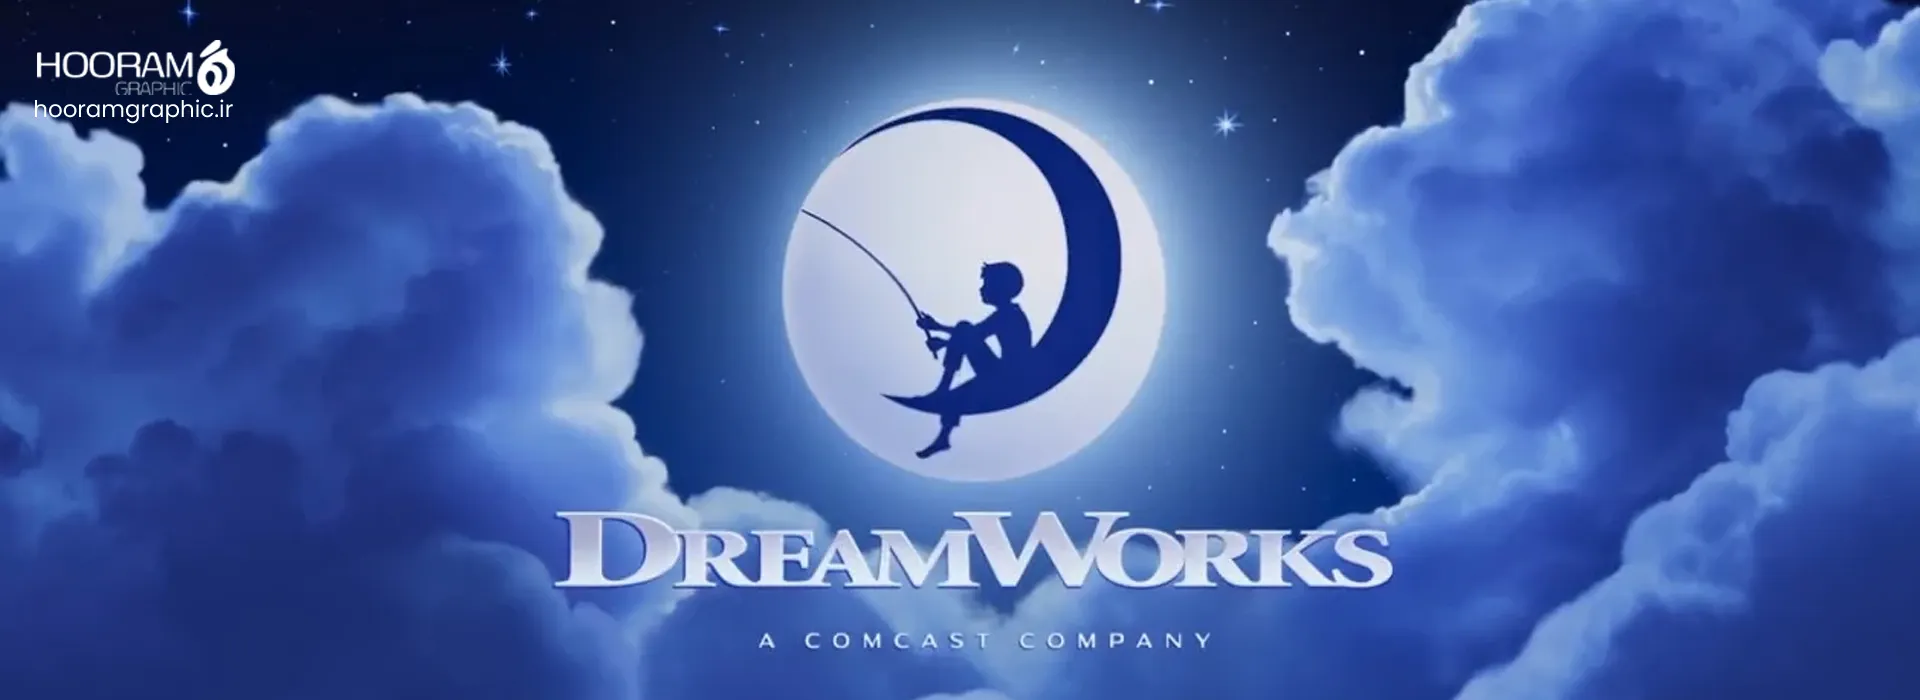 dream works- شرکت های انیمیشن